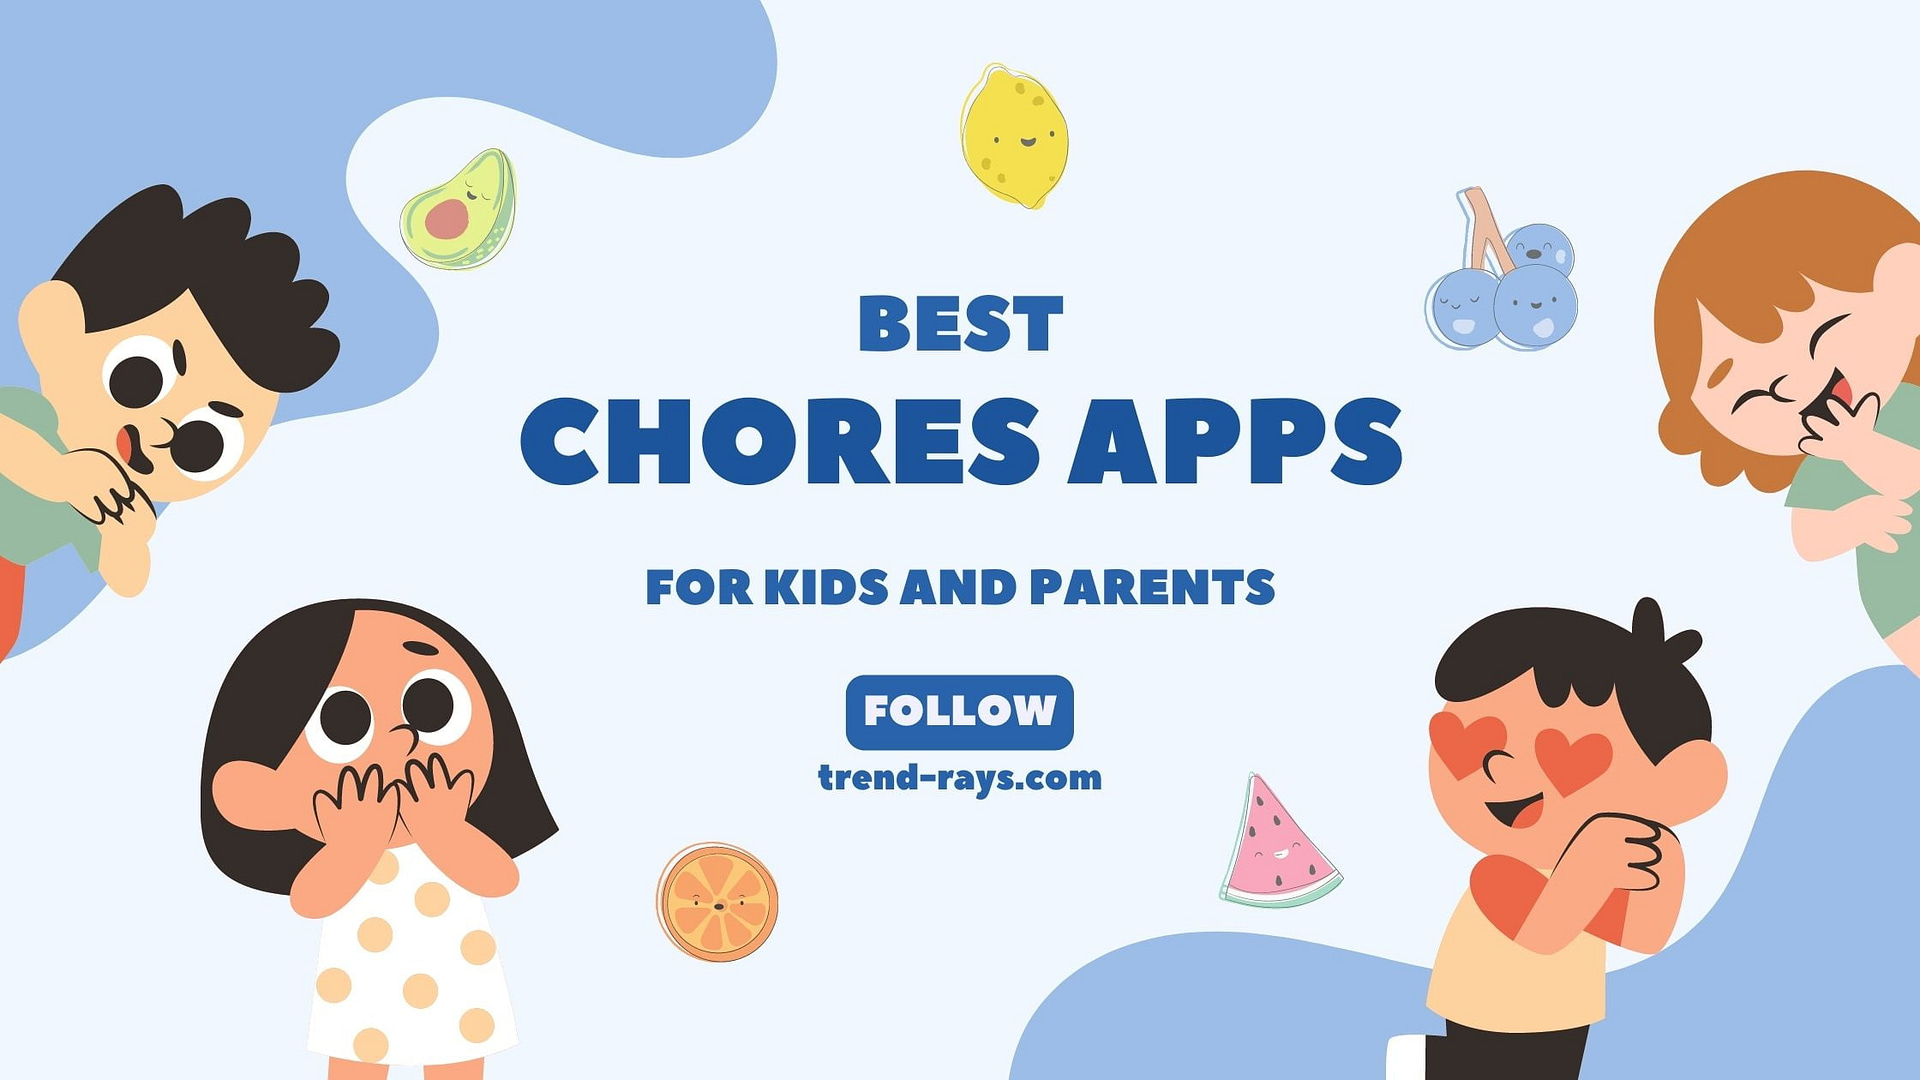 Top 10 Best Chores Apps